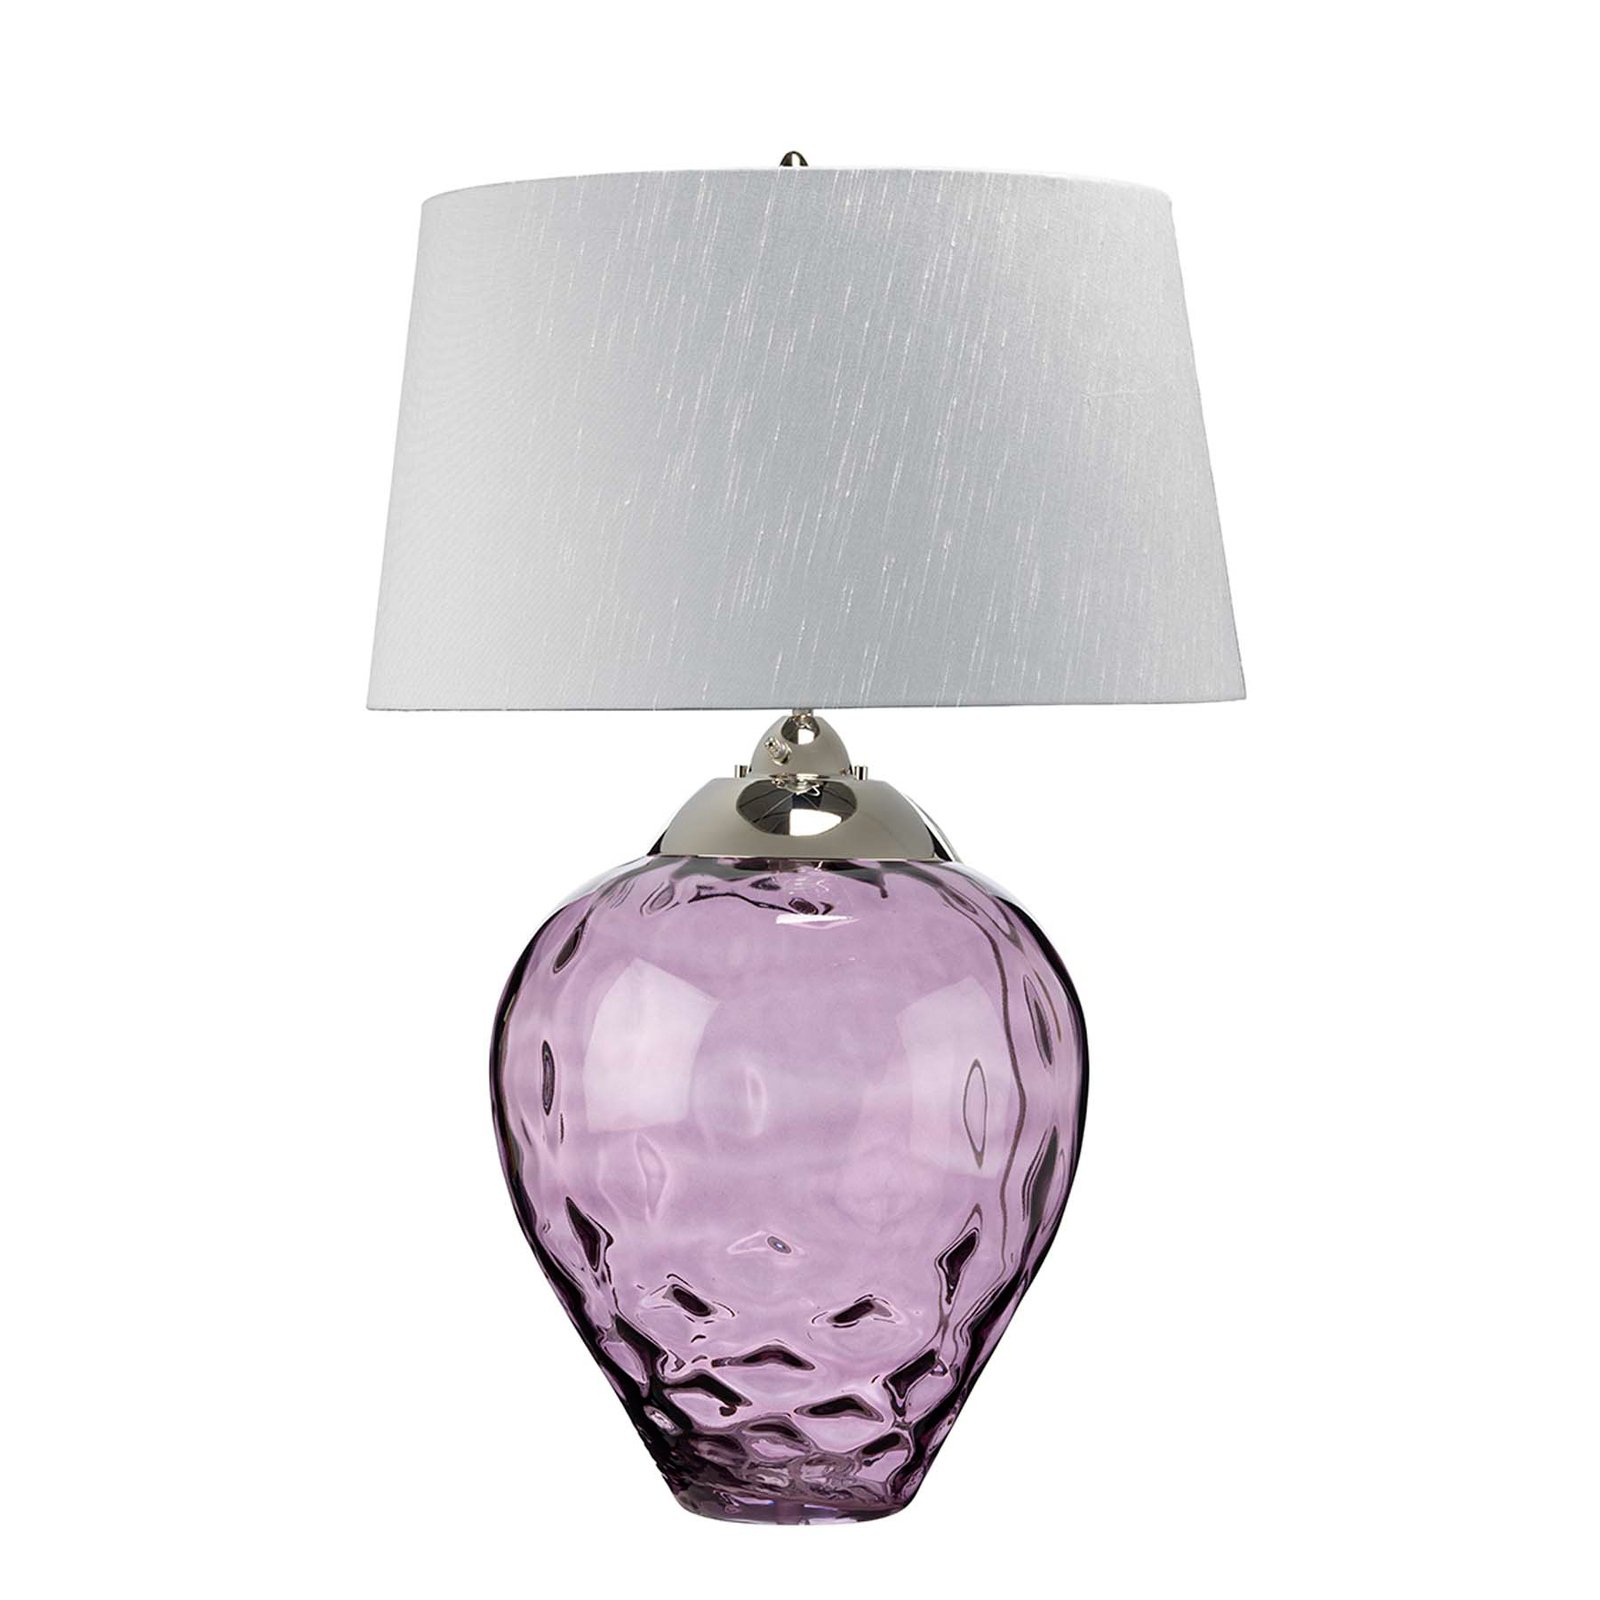 Samara bordlampe, Ø 51 cm, rosa, stoff, glass, 2 lamper